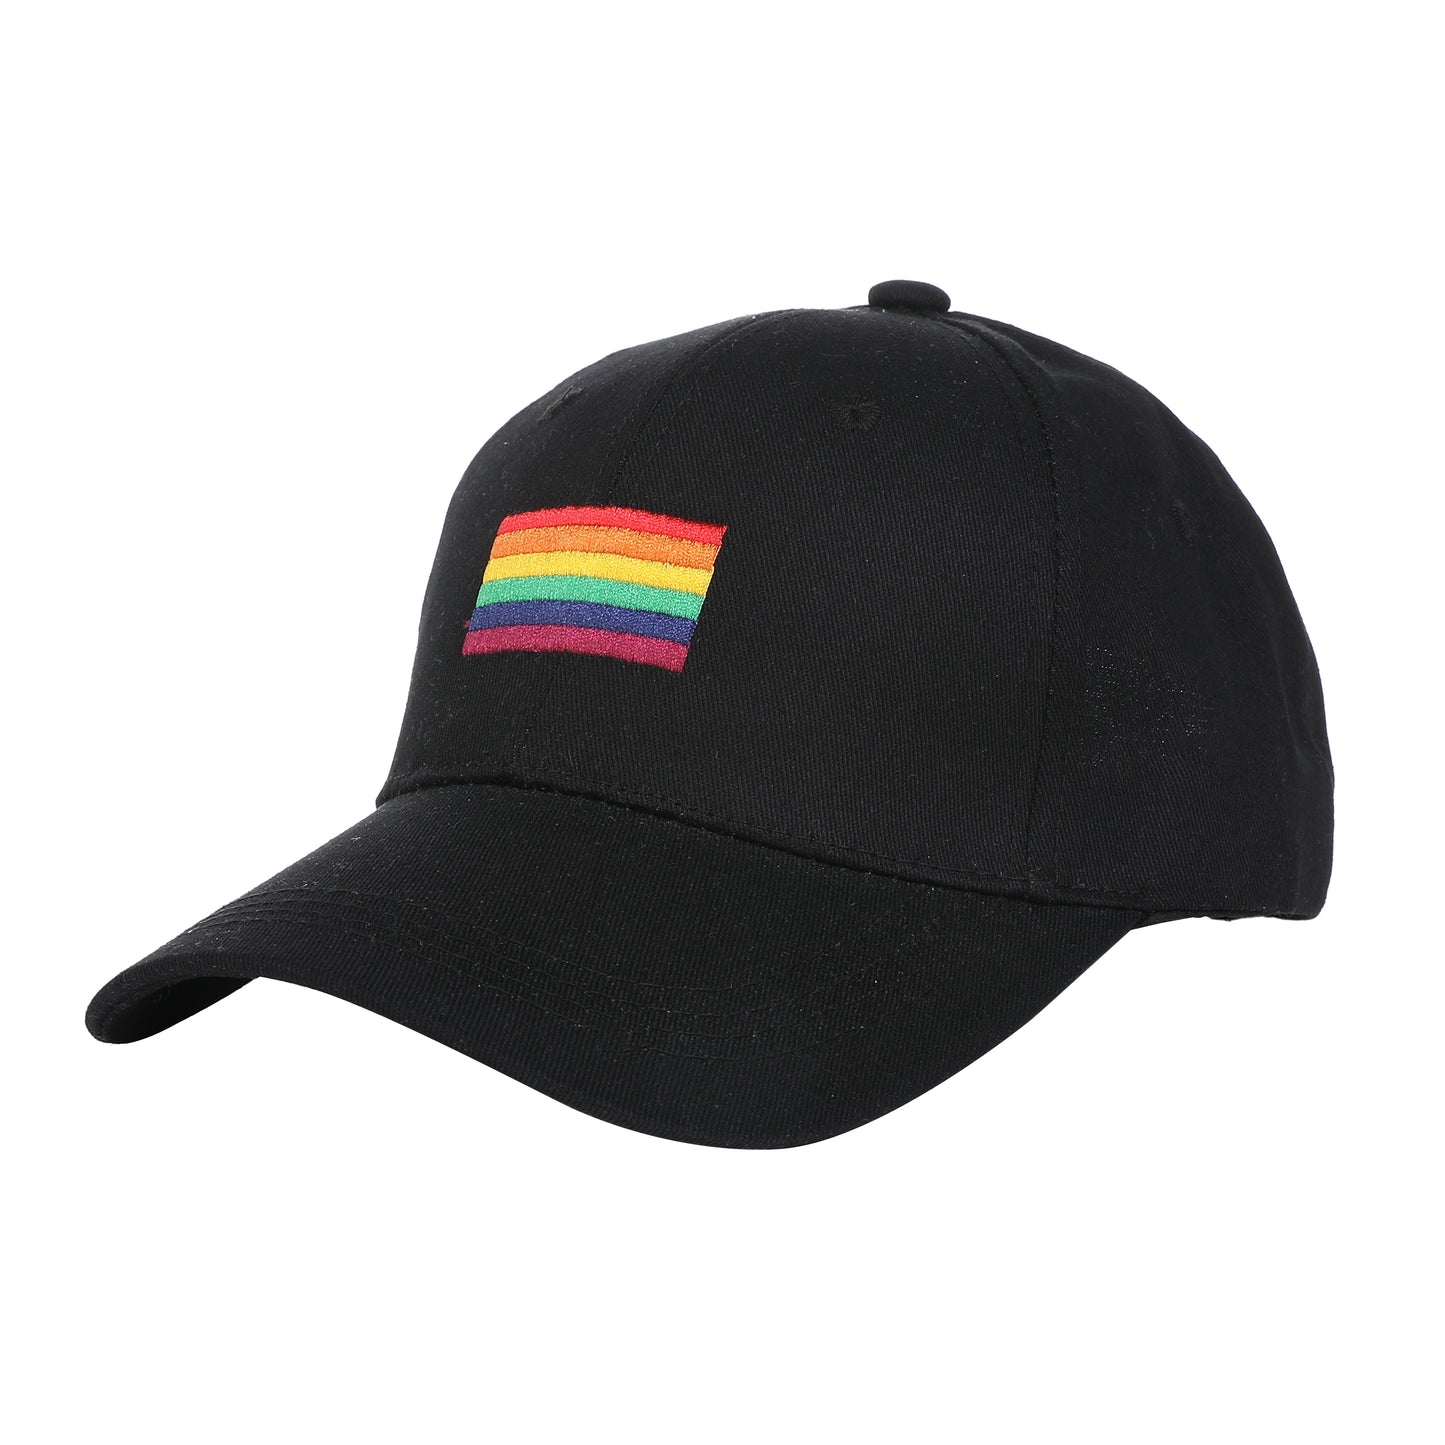 Gay Pride Baseball Cap With Rainbow Gay Pride Flag Embroidery.